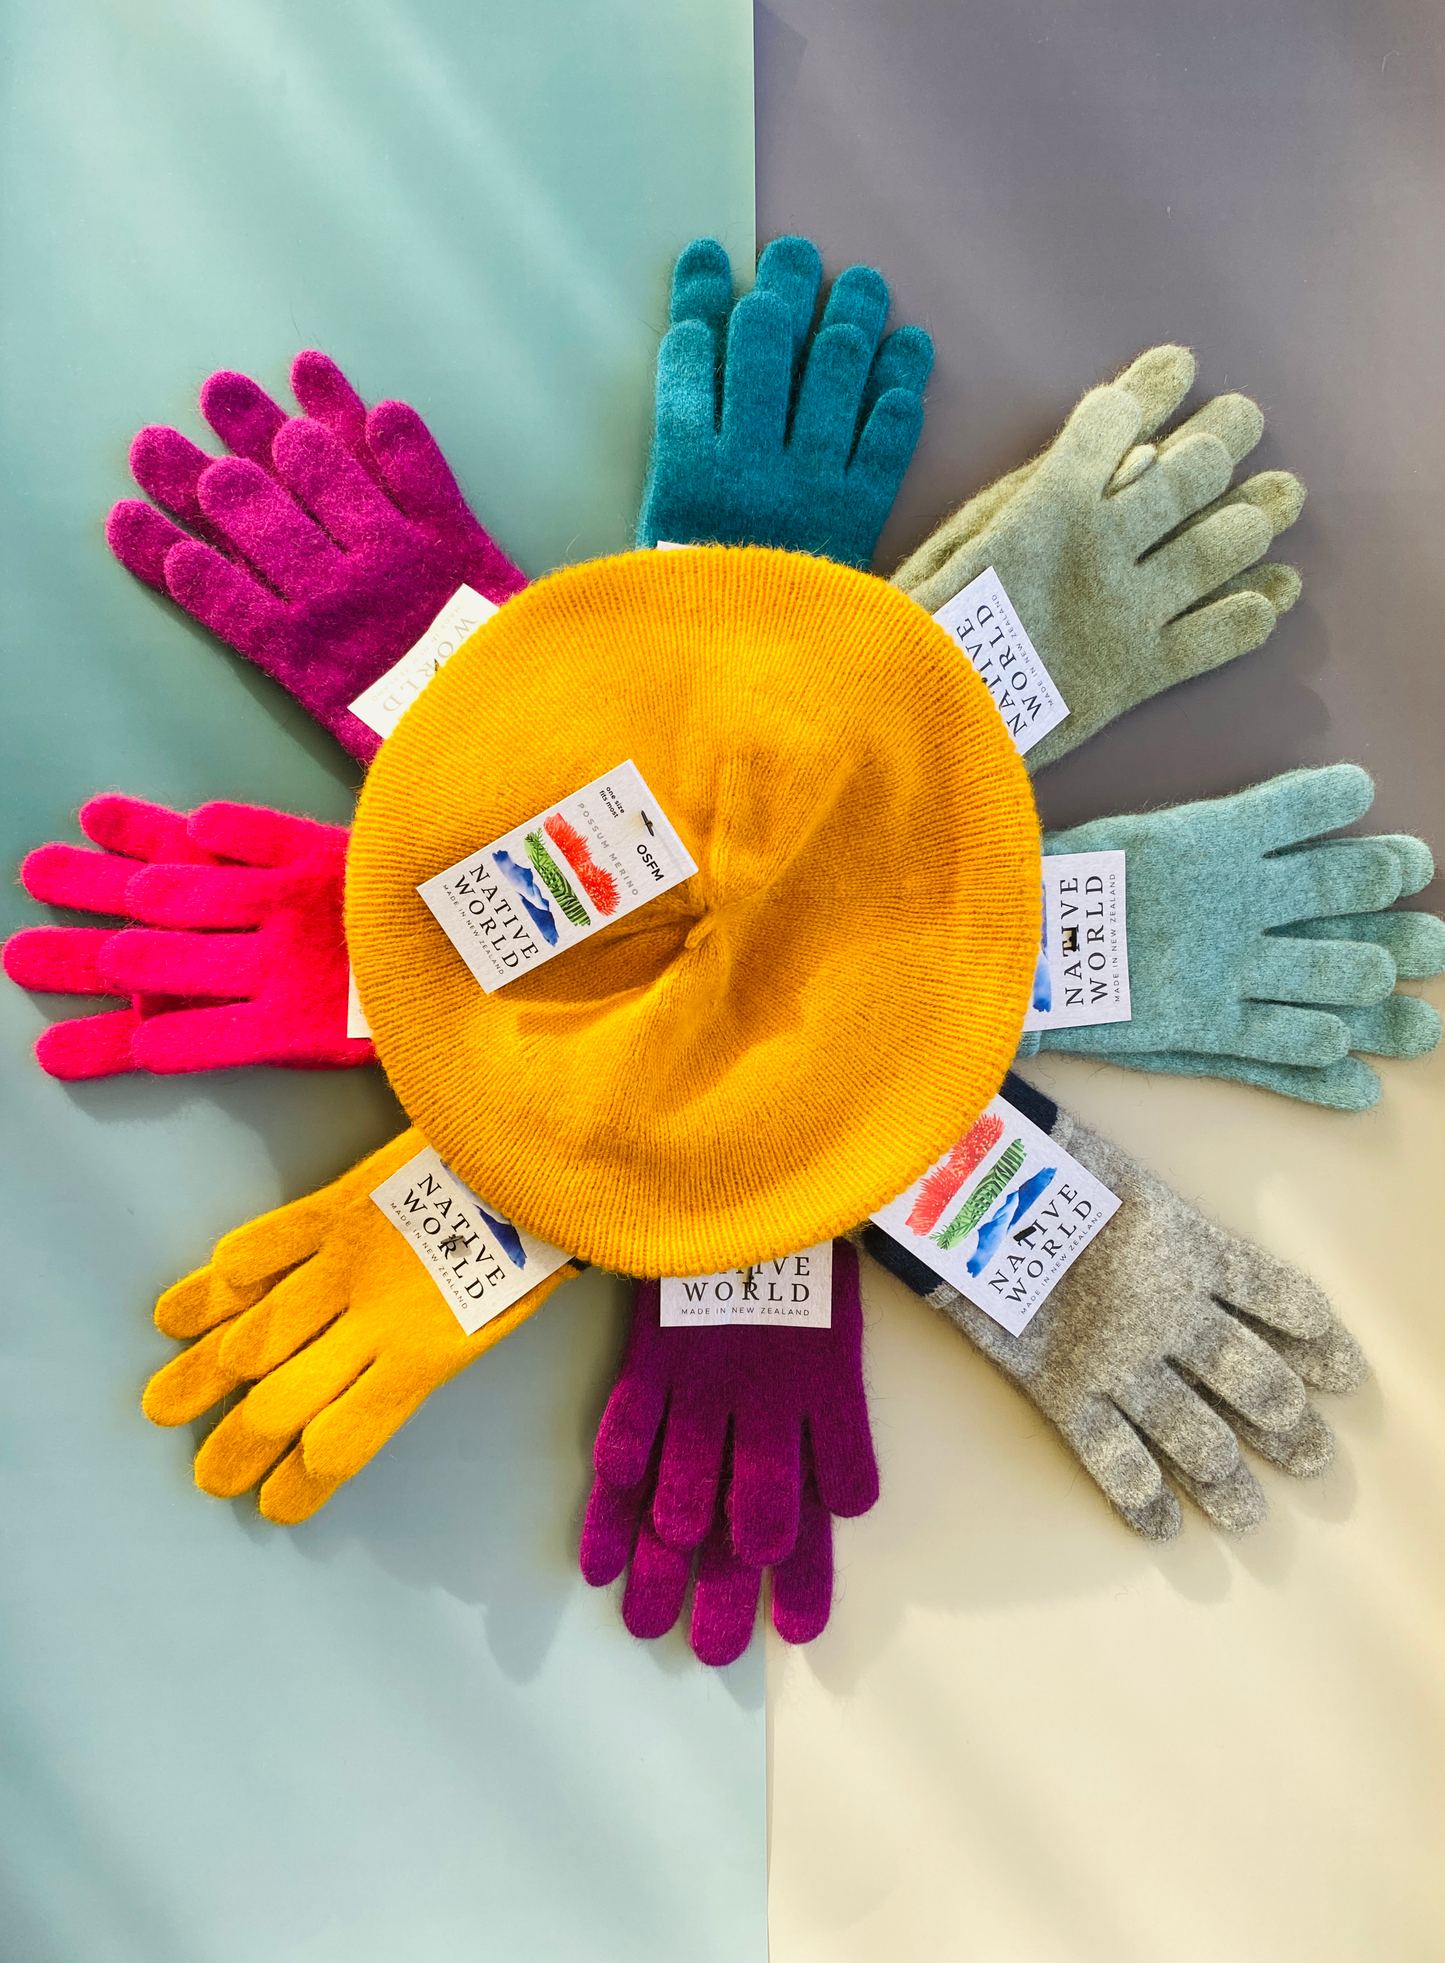 Gloves: Teal Green Gloves (Azure), Possum & Merino Wool, Made in New Zealand